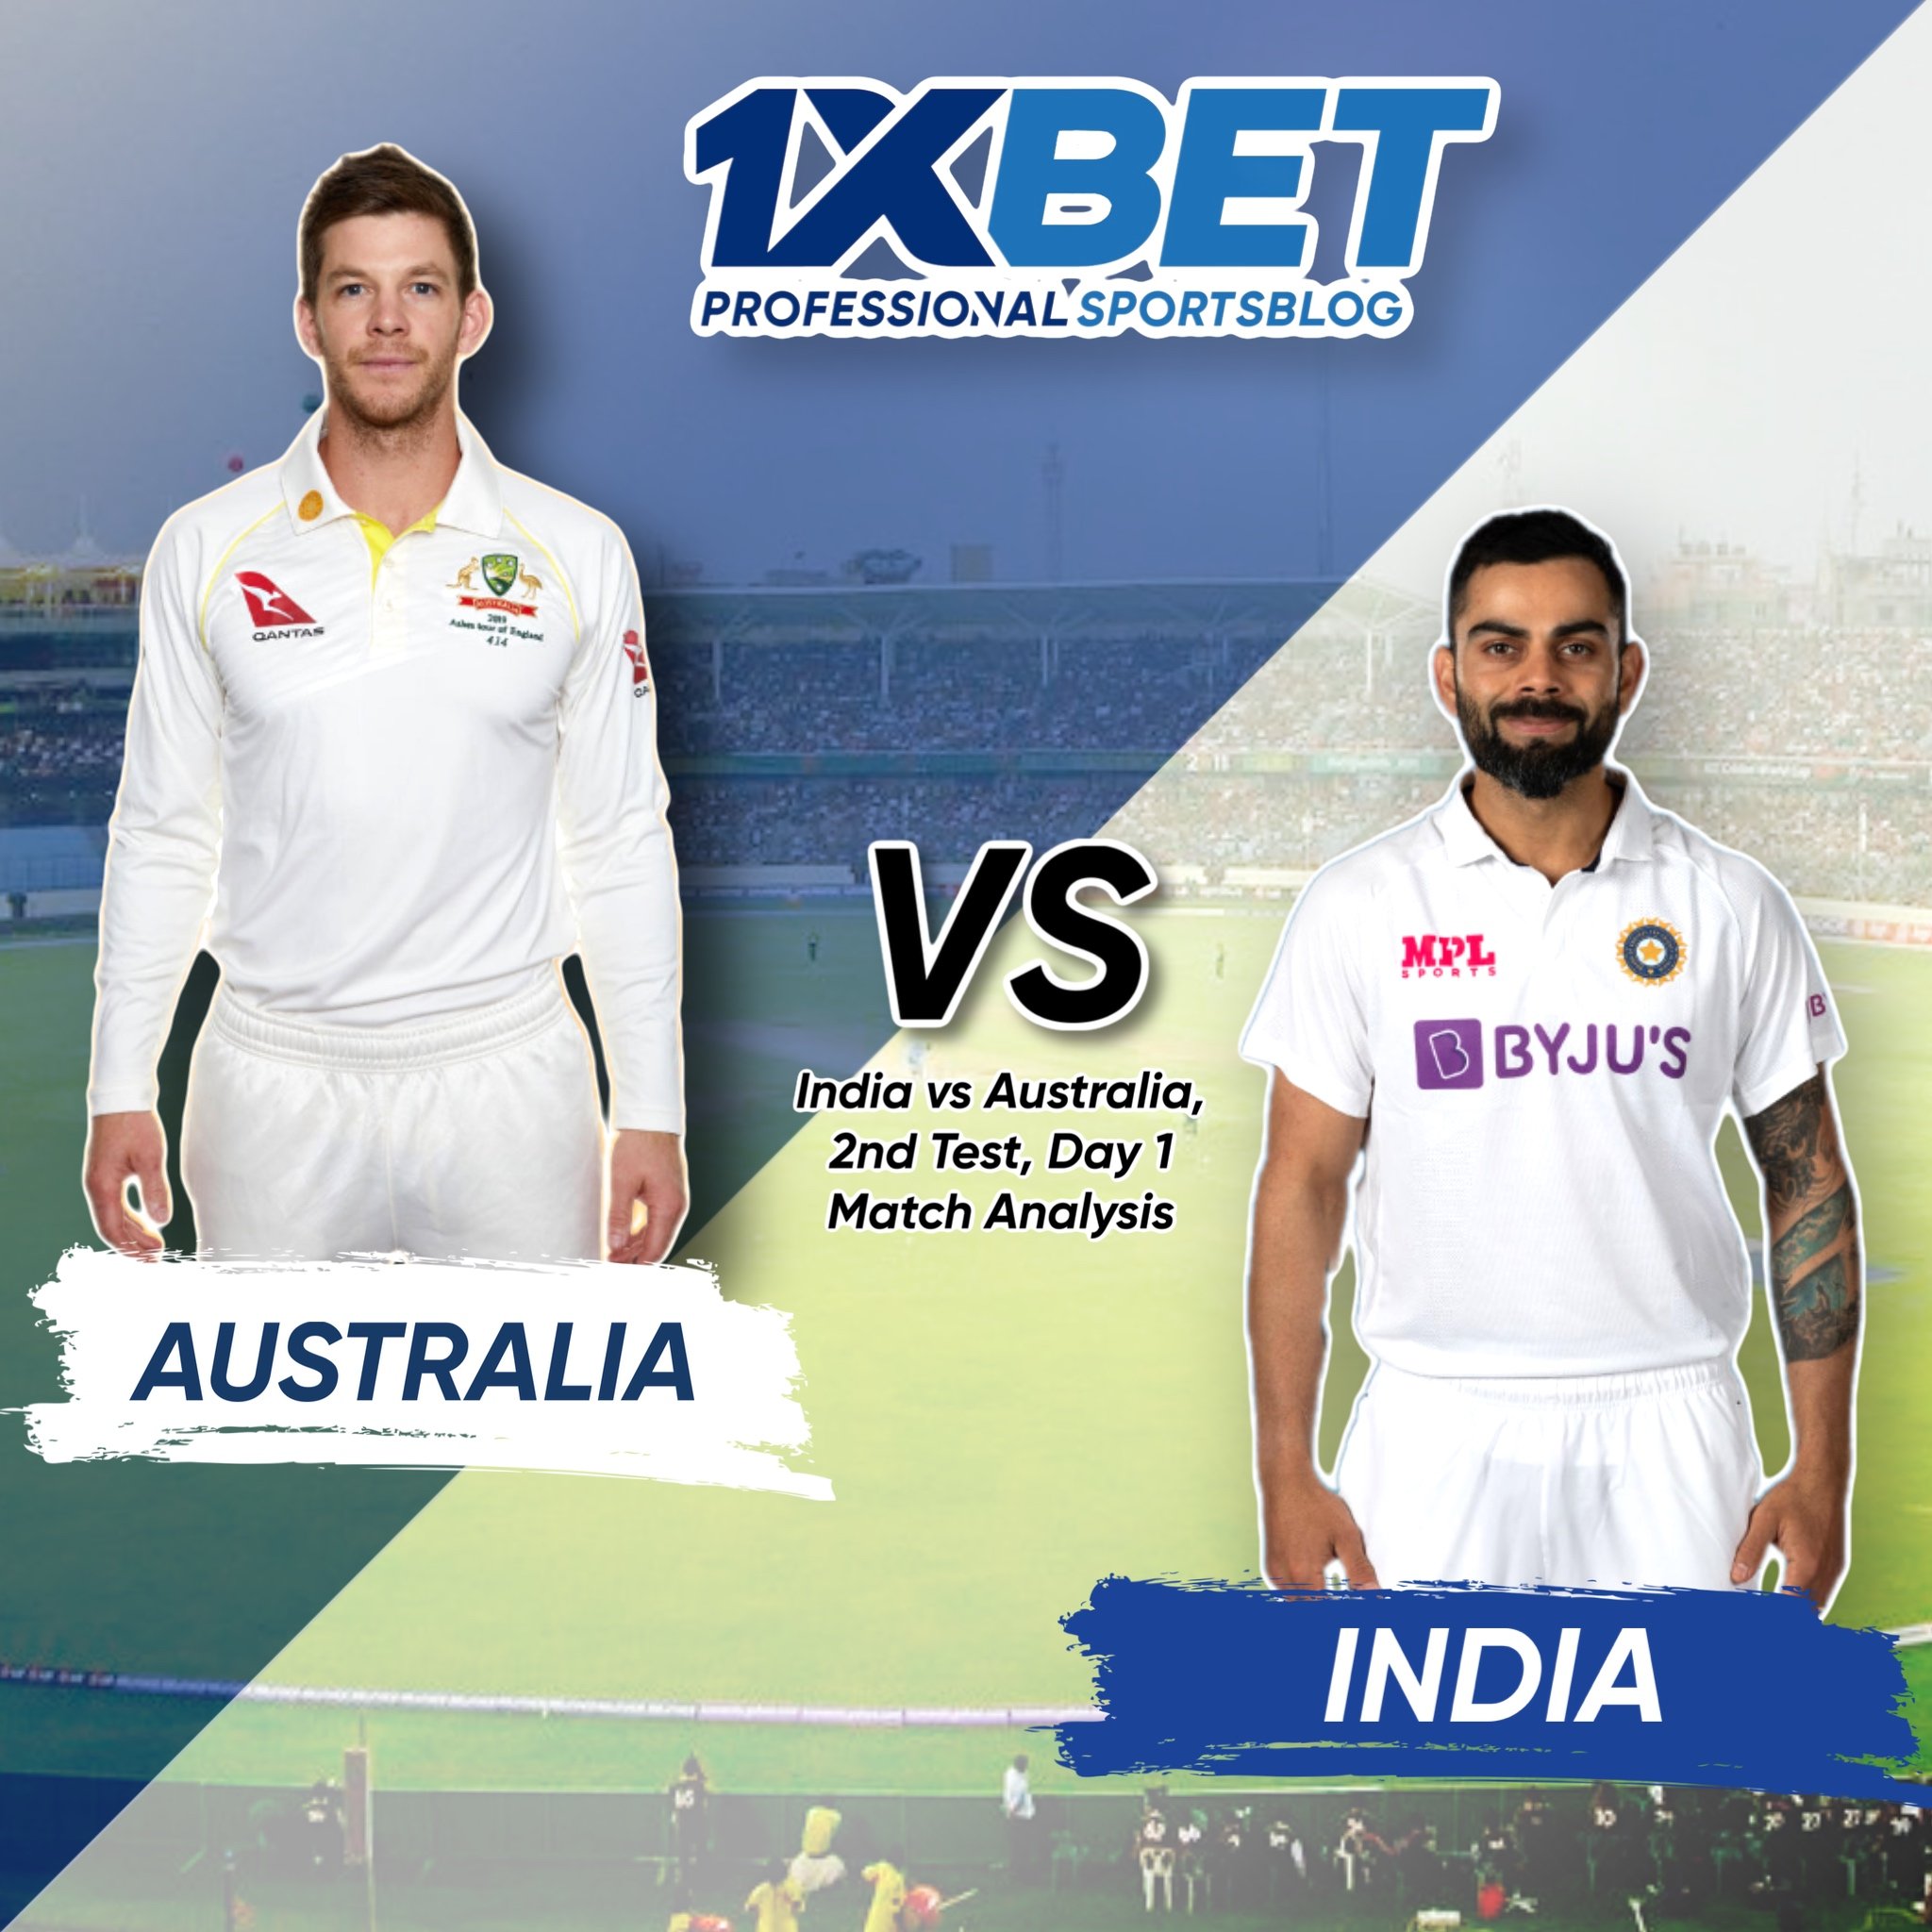 India vs Australia, 2nd Test, Day 1 Match Analysis